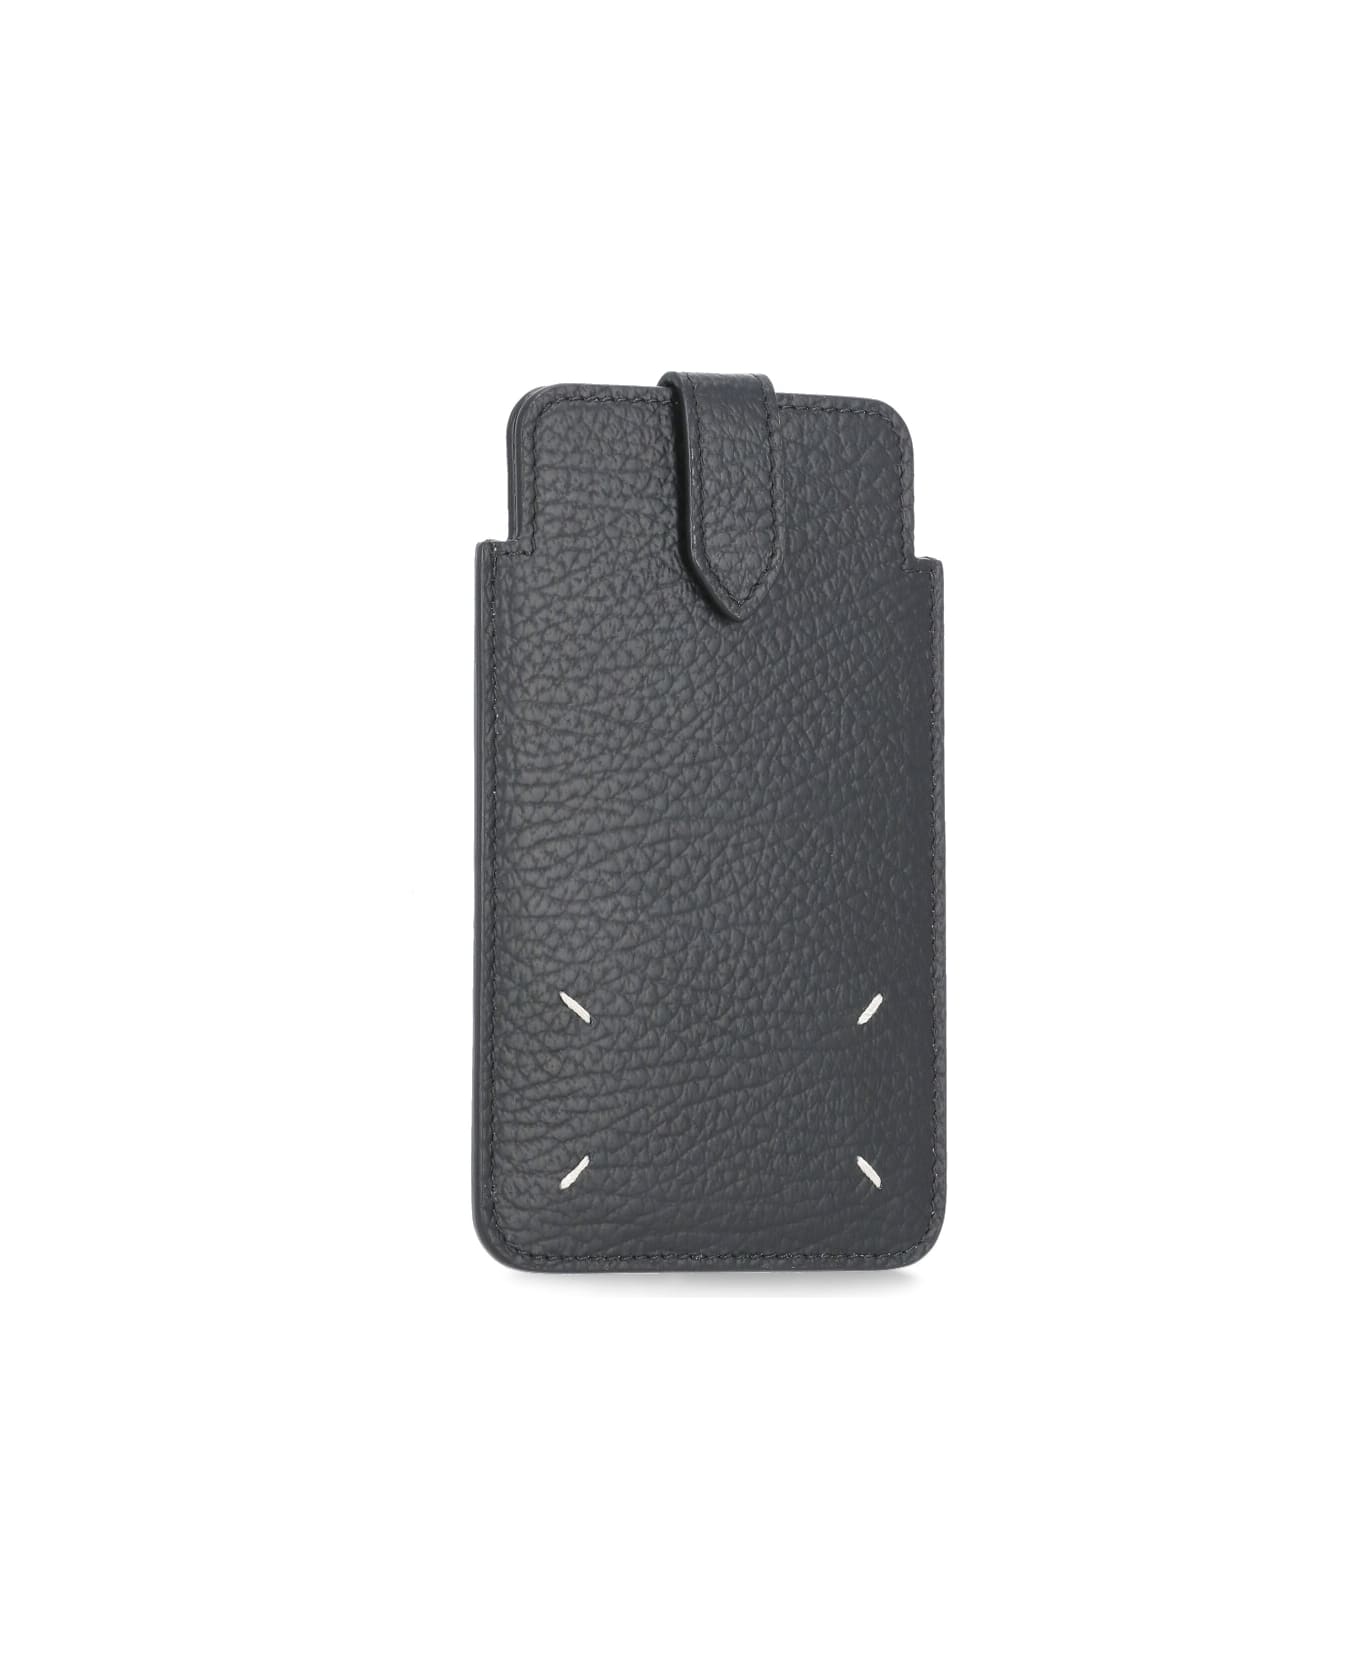 Maison Margiela Leather Cell Phone Holder - Black